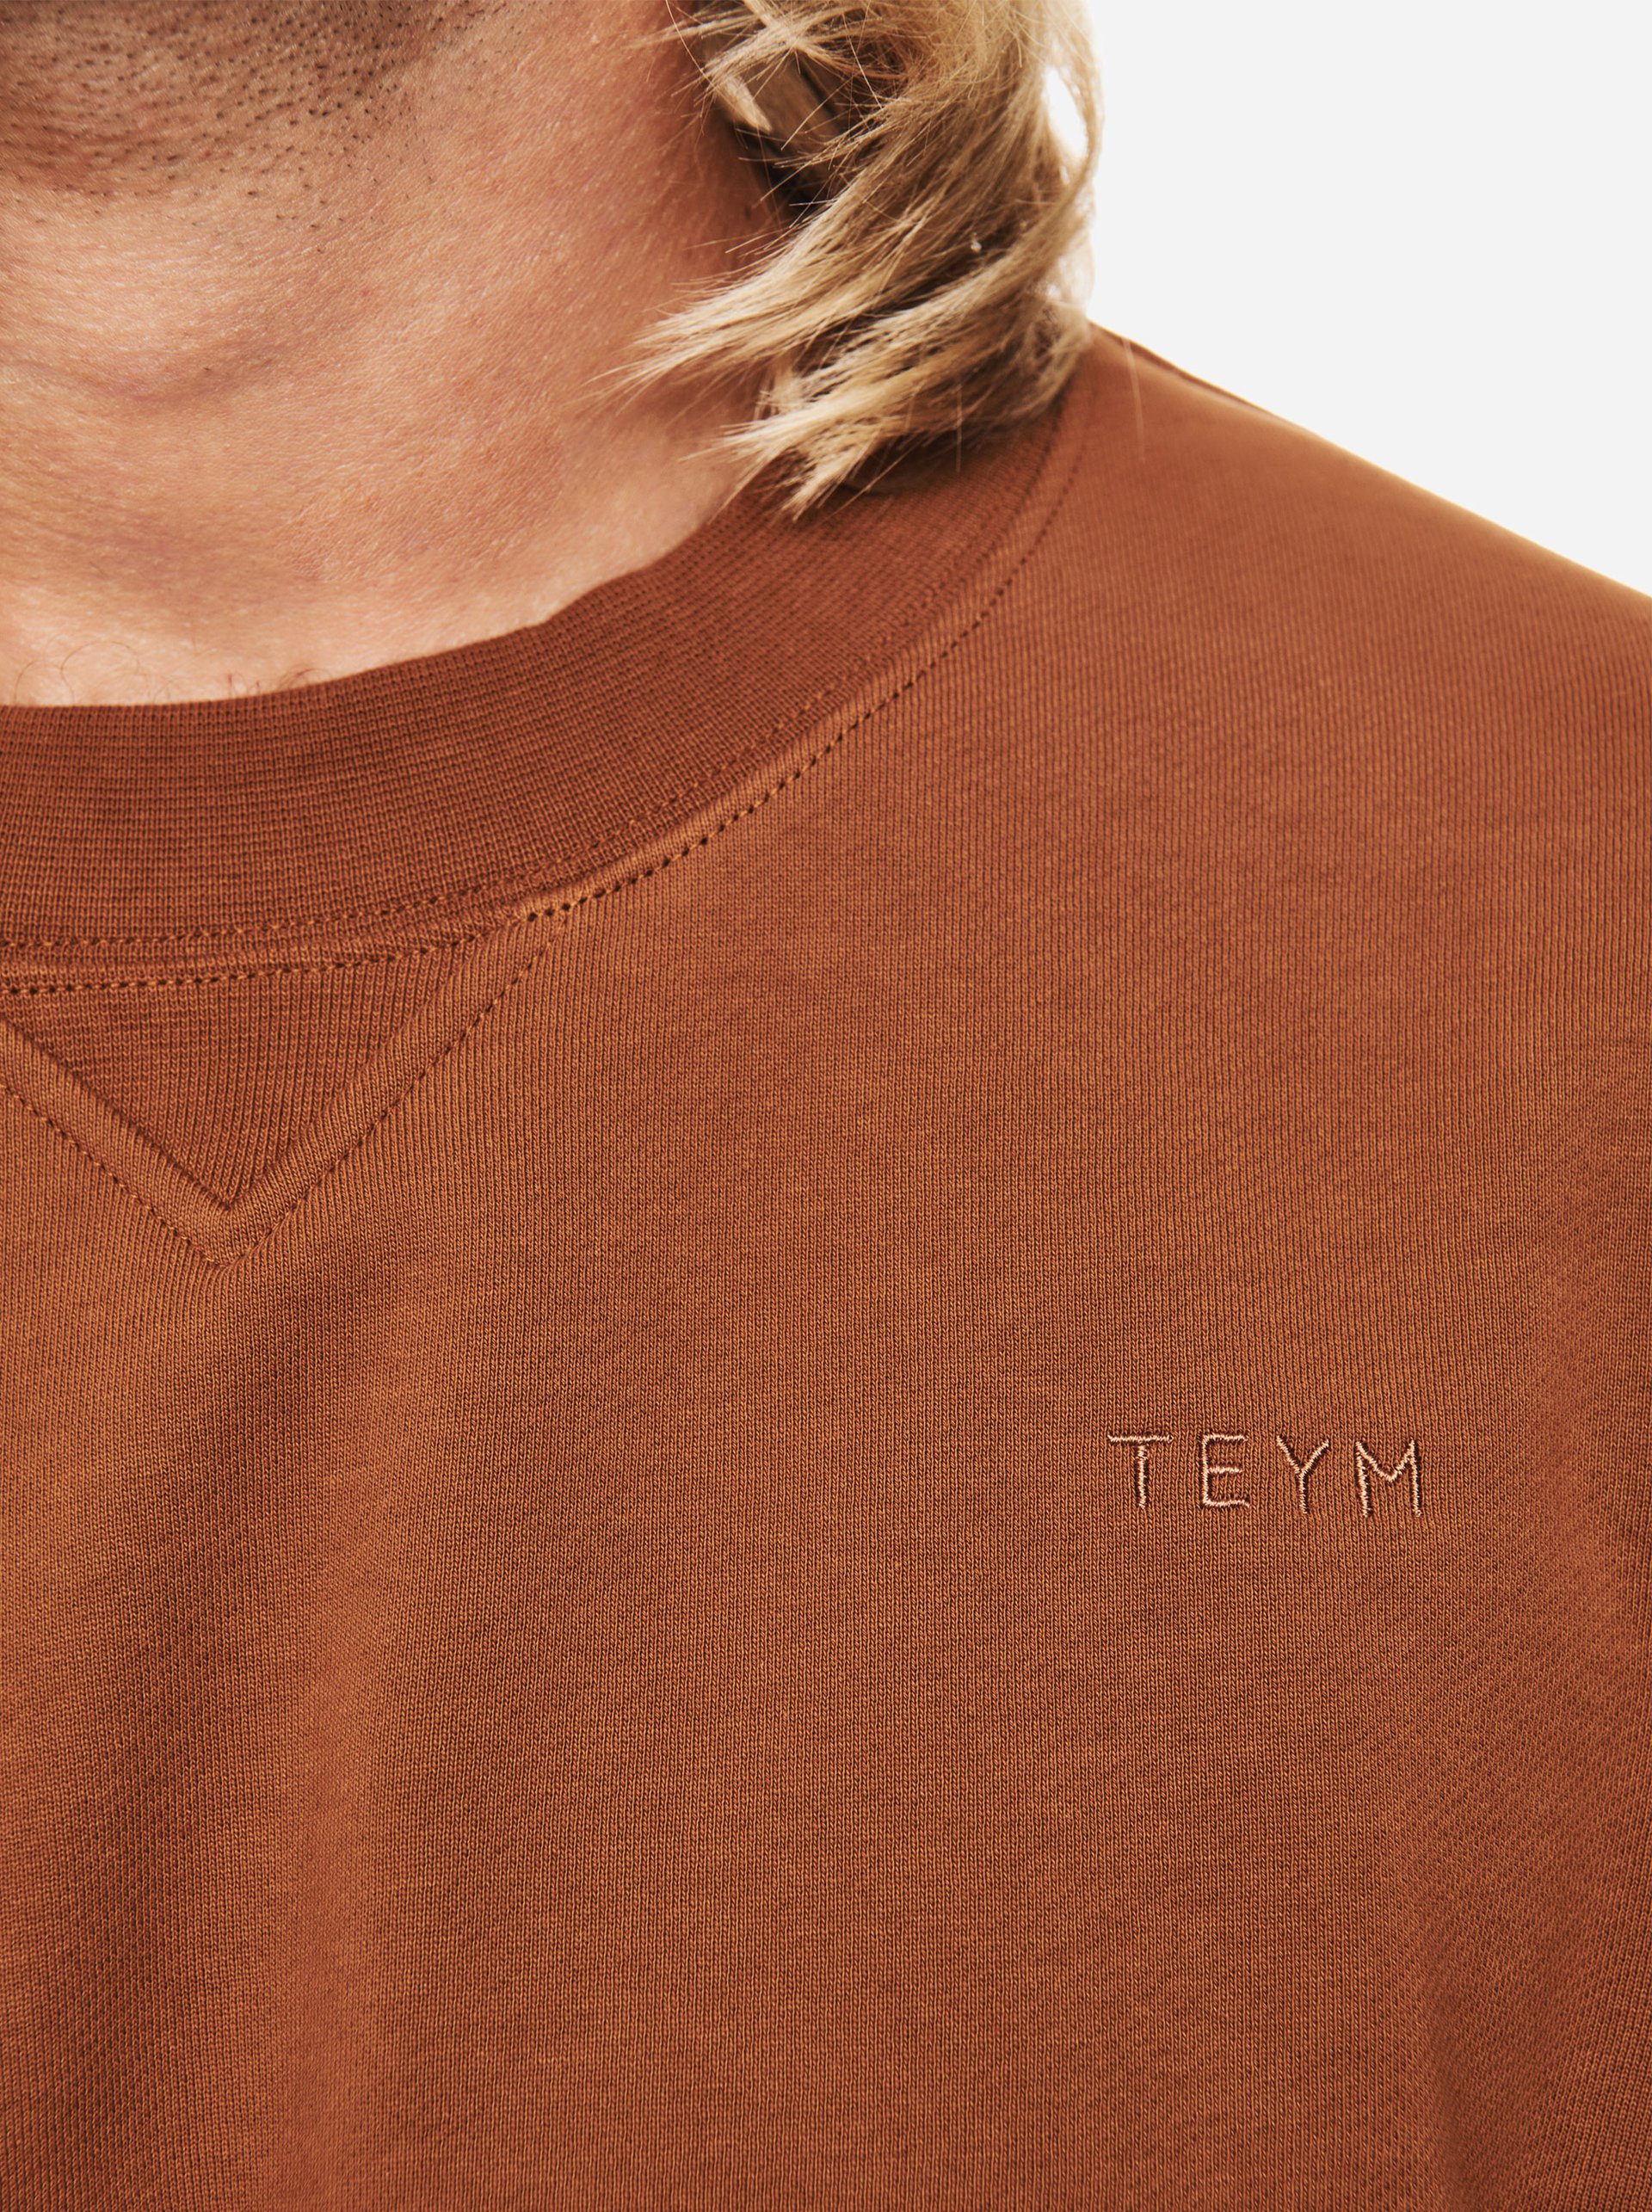 Teym-TheSweatshirt-Men-Camel02